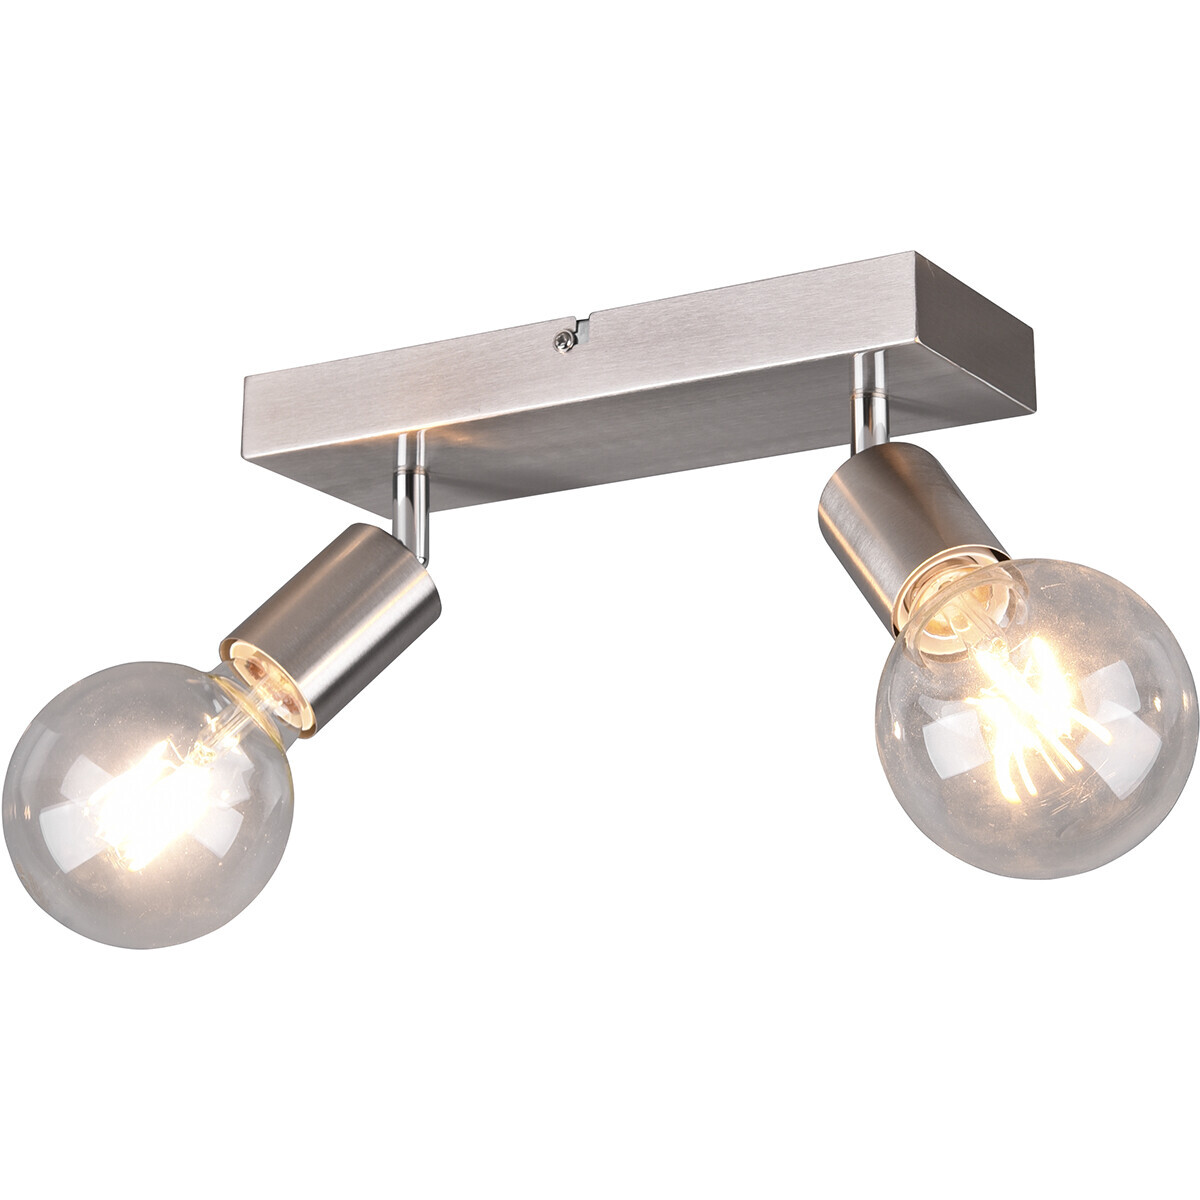 BES LED LED Plafondspot - Trion Zuncka - E27 Fitting - 2-lichts - Rechthoek - Mat Nikkel - Aluminium